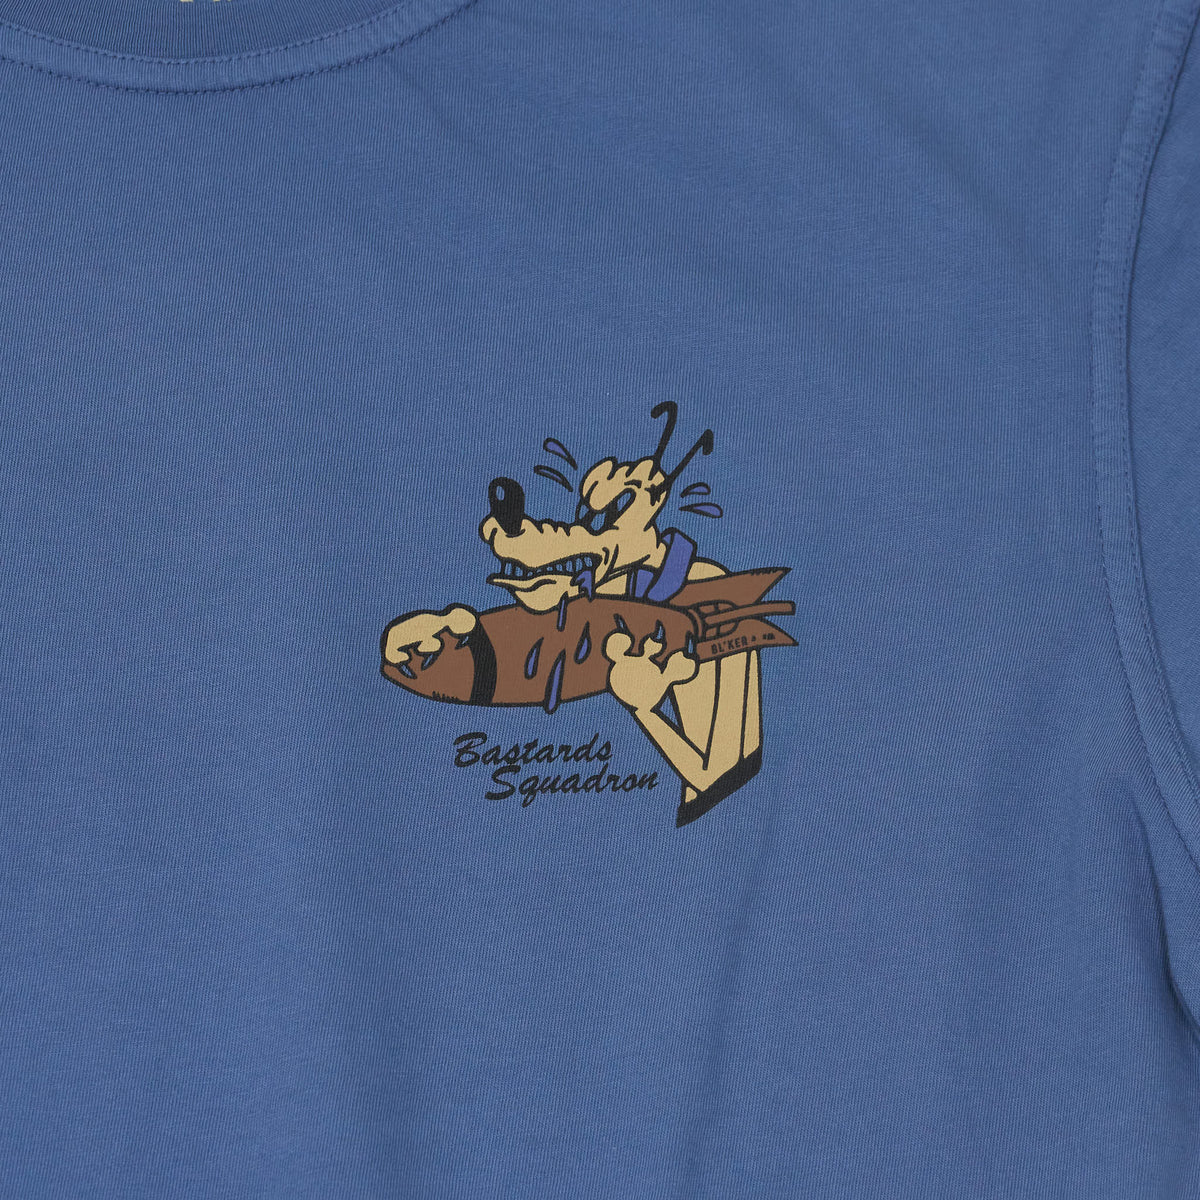 Bl&#39;ker Tee Short Sleeve Crew Neck Flying Dogs T-Shirt